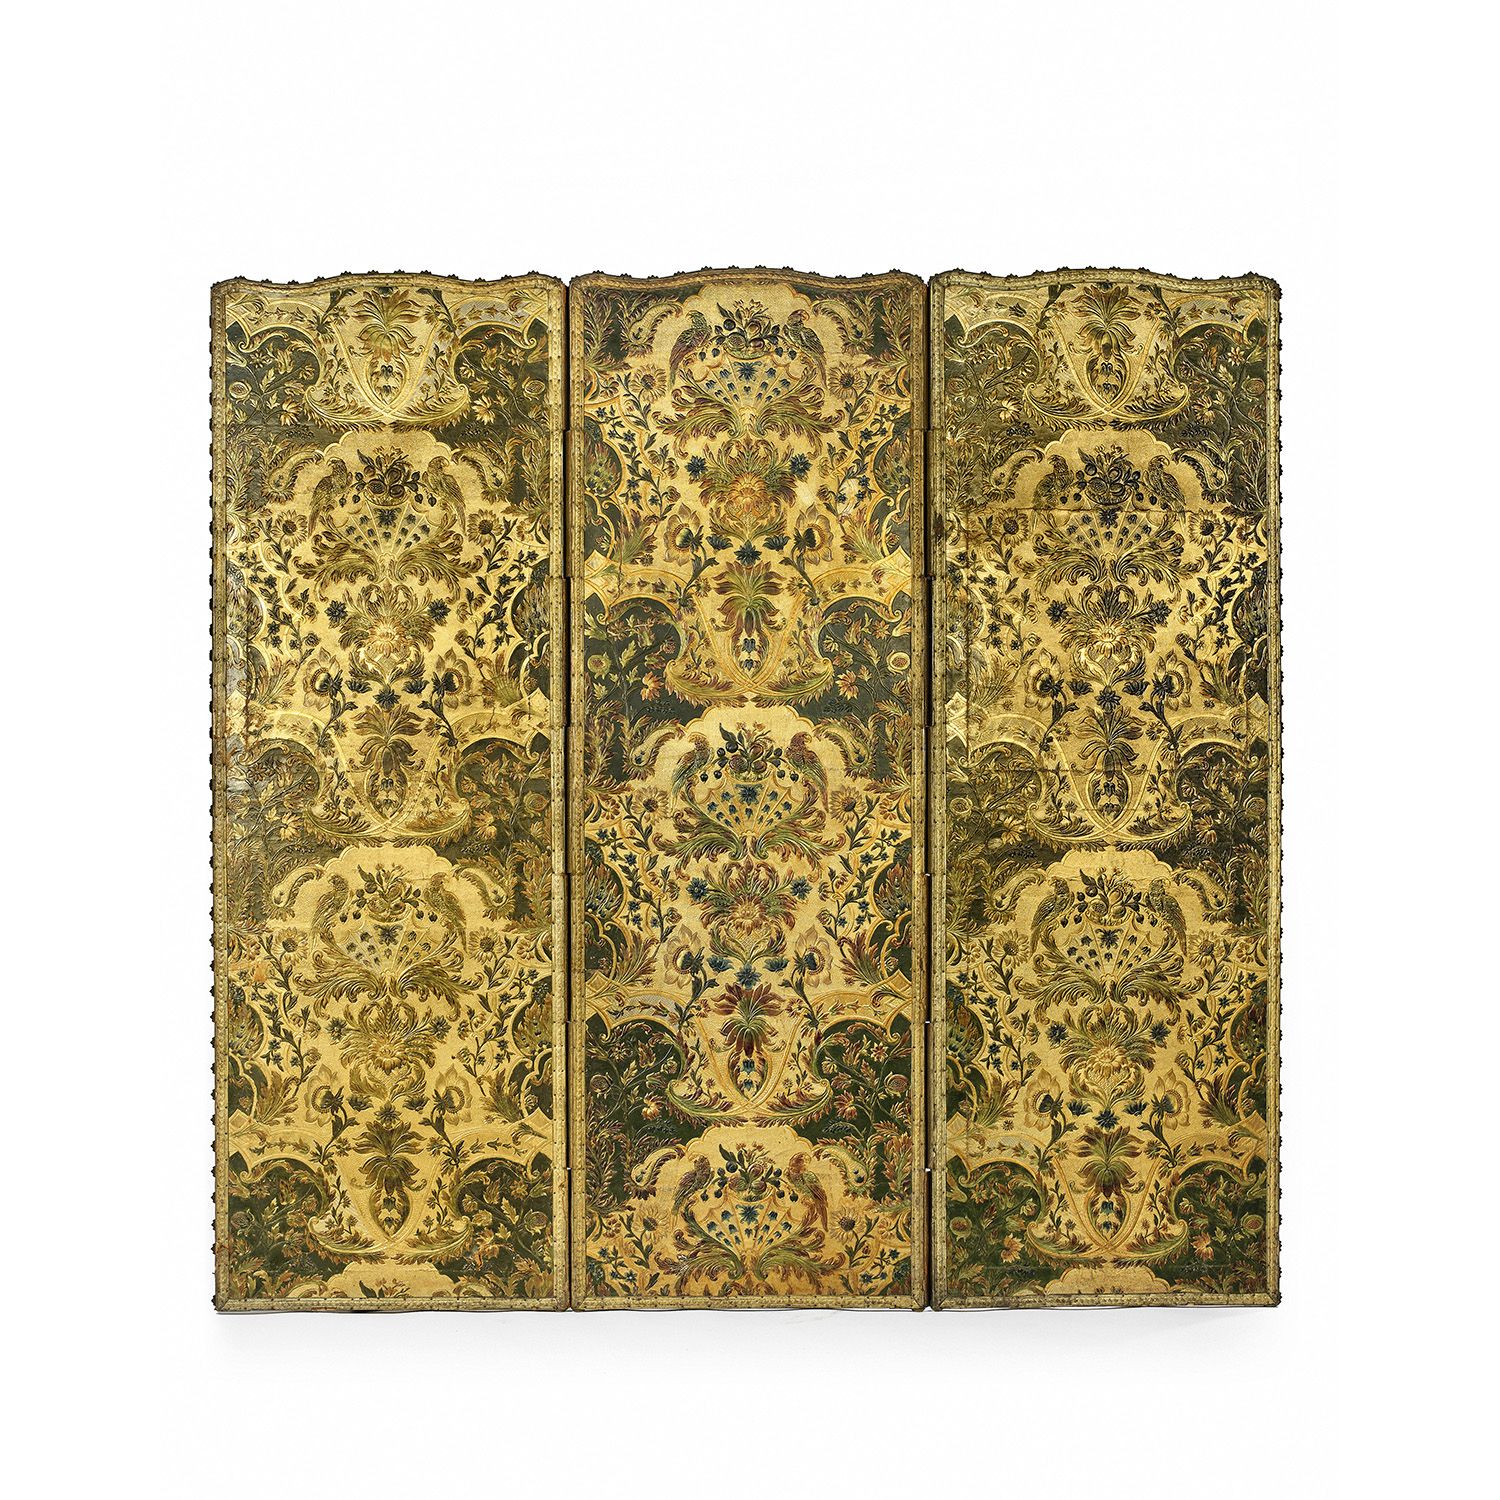 Null PARAVENT AUS KORDOUGLEDER, 19. Jahrhundert
drei Blätter aus geprägtem Leder&hellip;